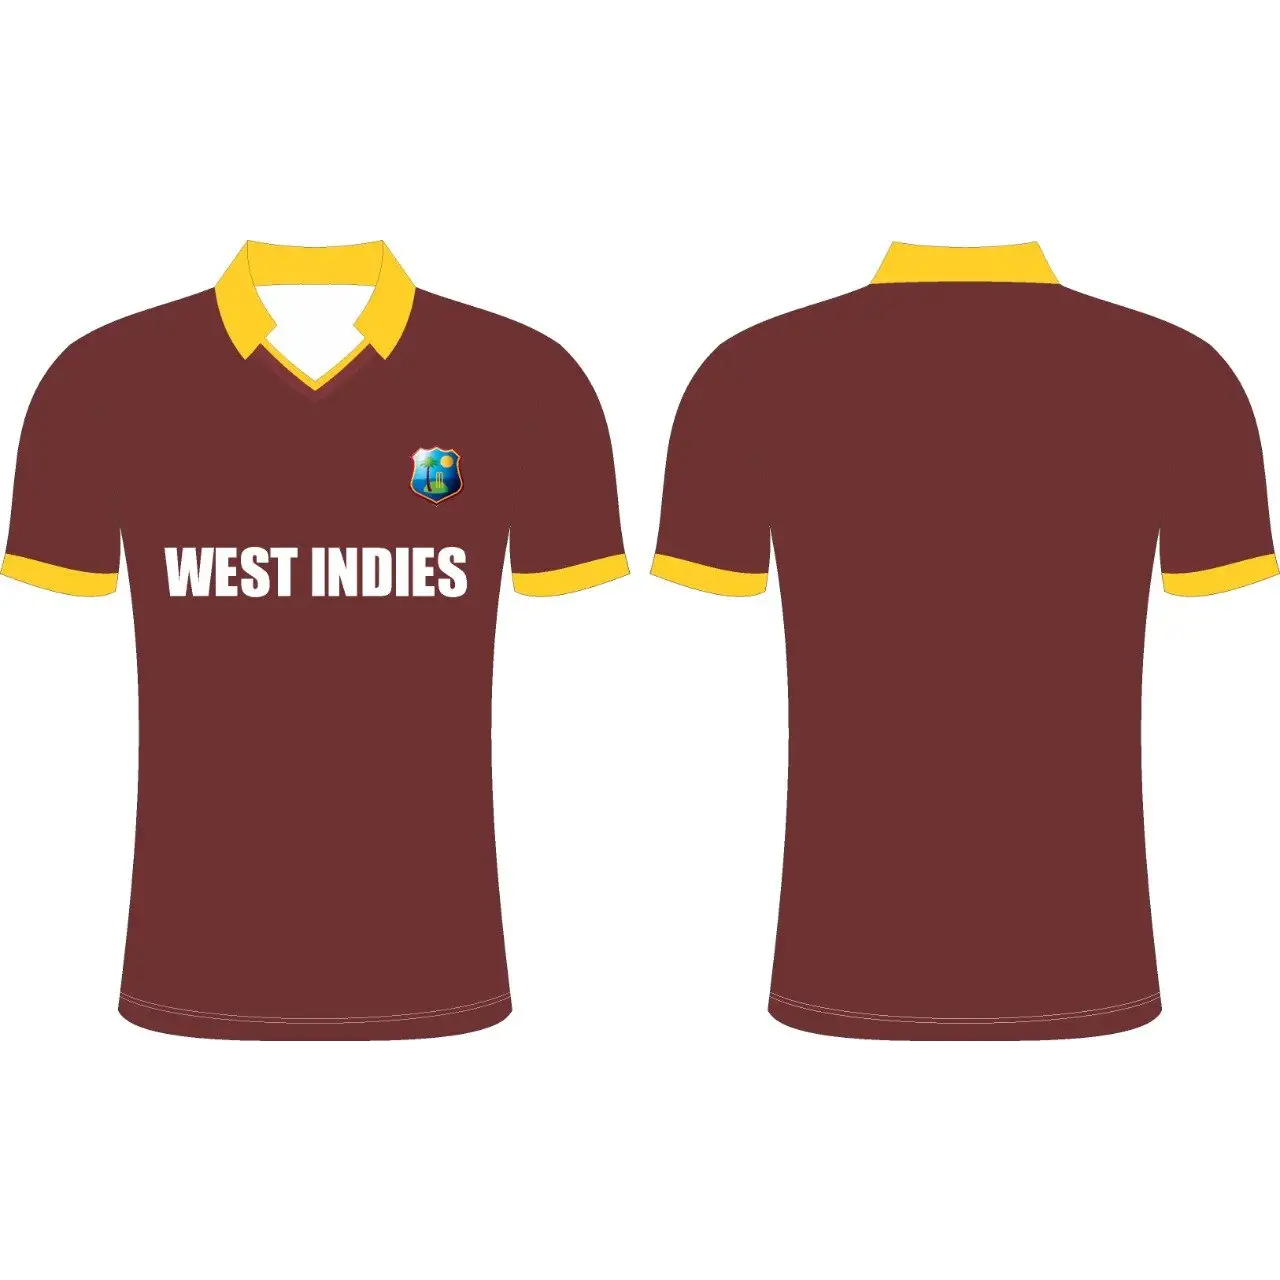 West Indies Cricket Team Maroon Shirt - CLOTHING - SHIRT